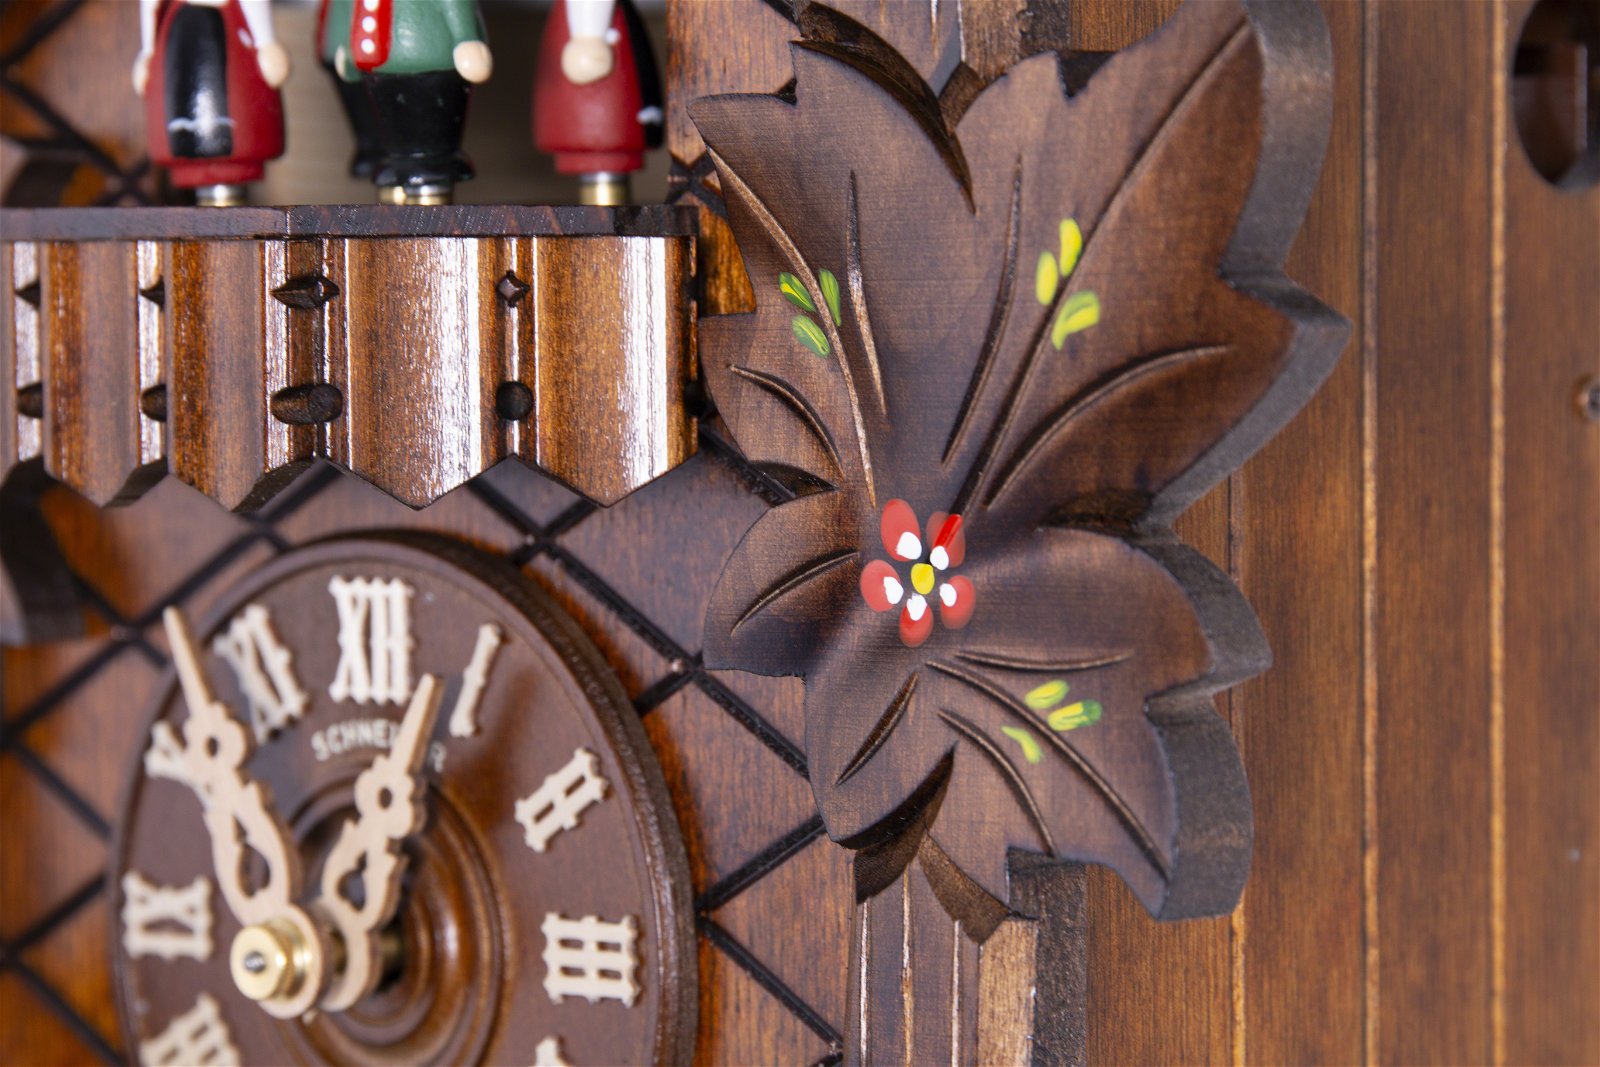 Reloj de cuco estilo “Madera tallada” movimiento mecánico de 8 días 42cm de Anton Schneider